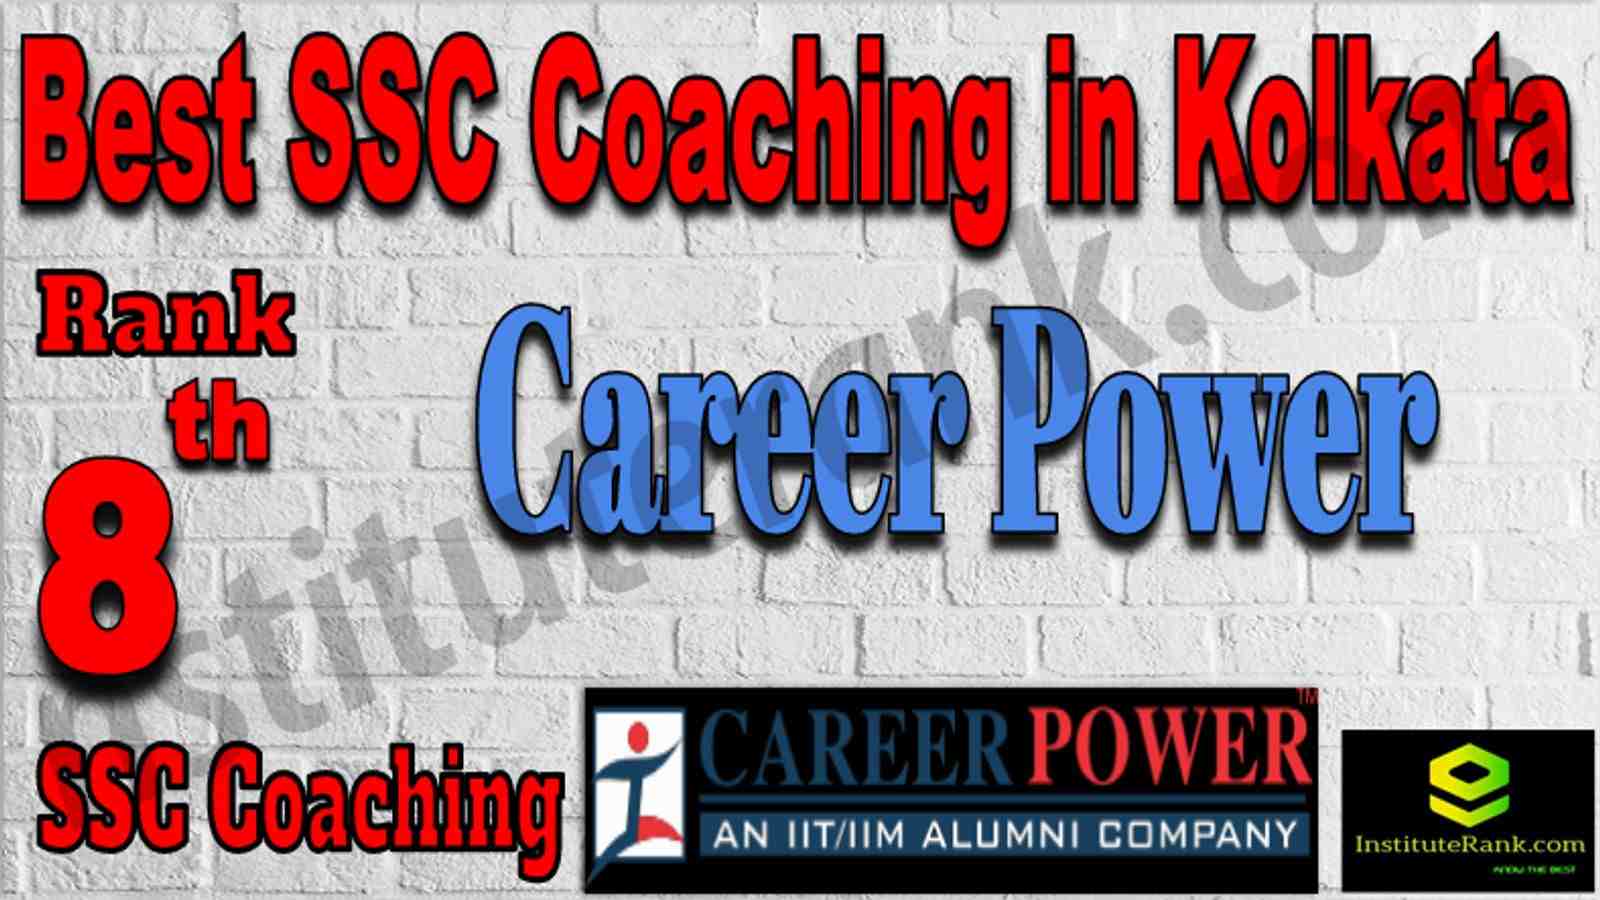 Rank 8 Best SSC Coaching in Kolkata